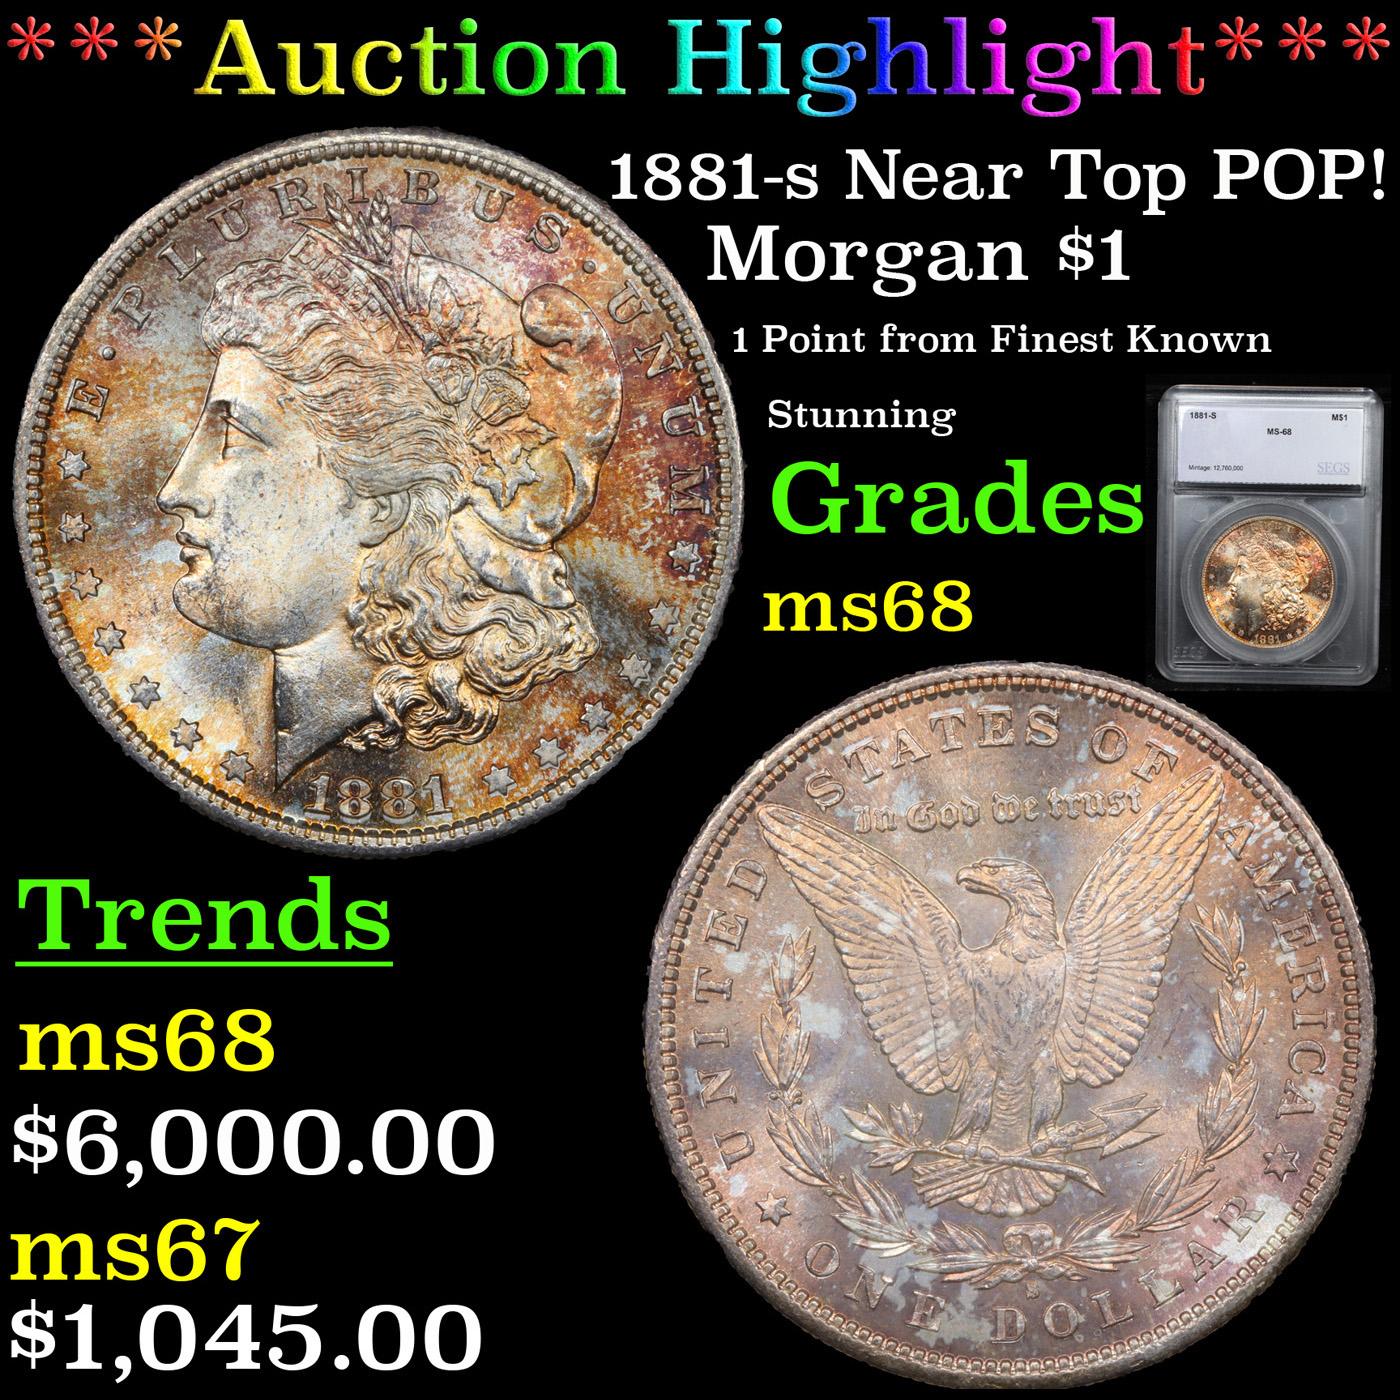 ***Auction Highlight*** 1881-s Near Top POP! Morgan Dollar $1 Graded ms68 By SEGS (fc)